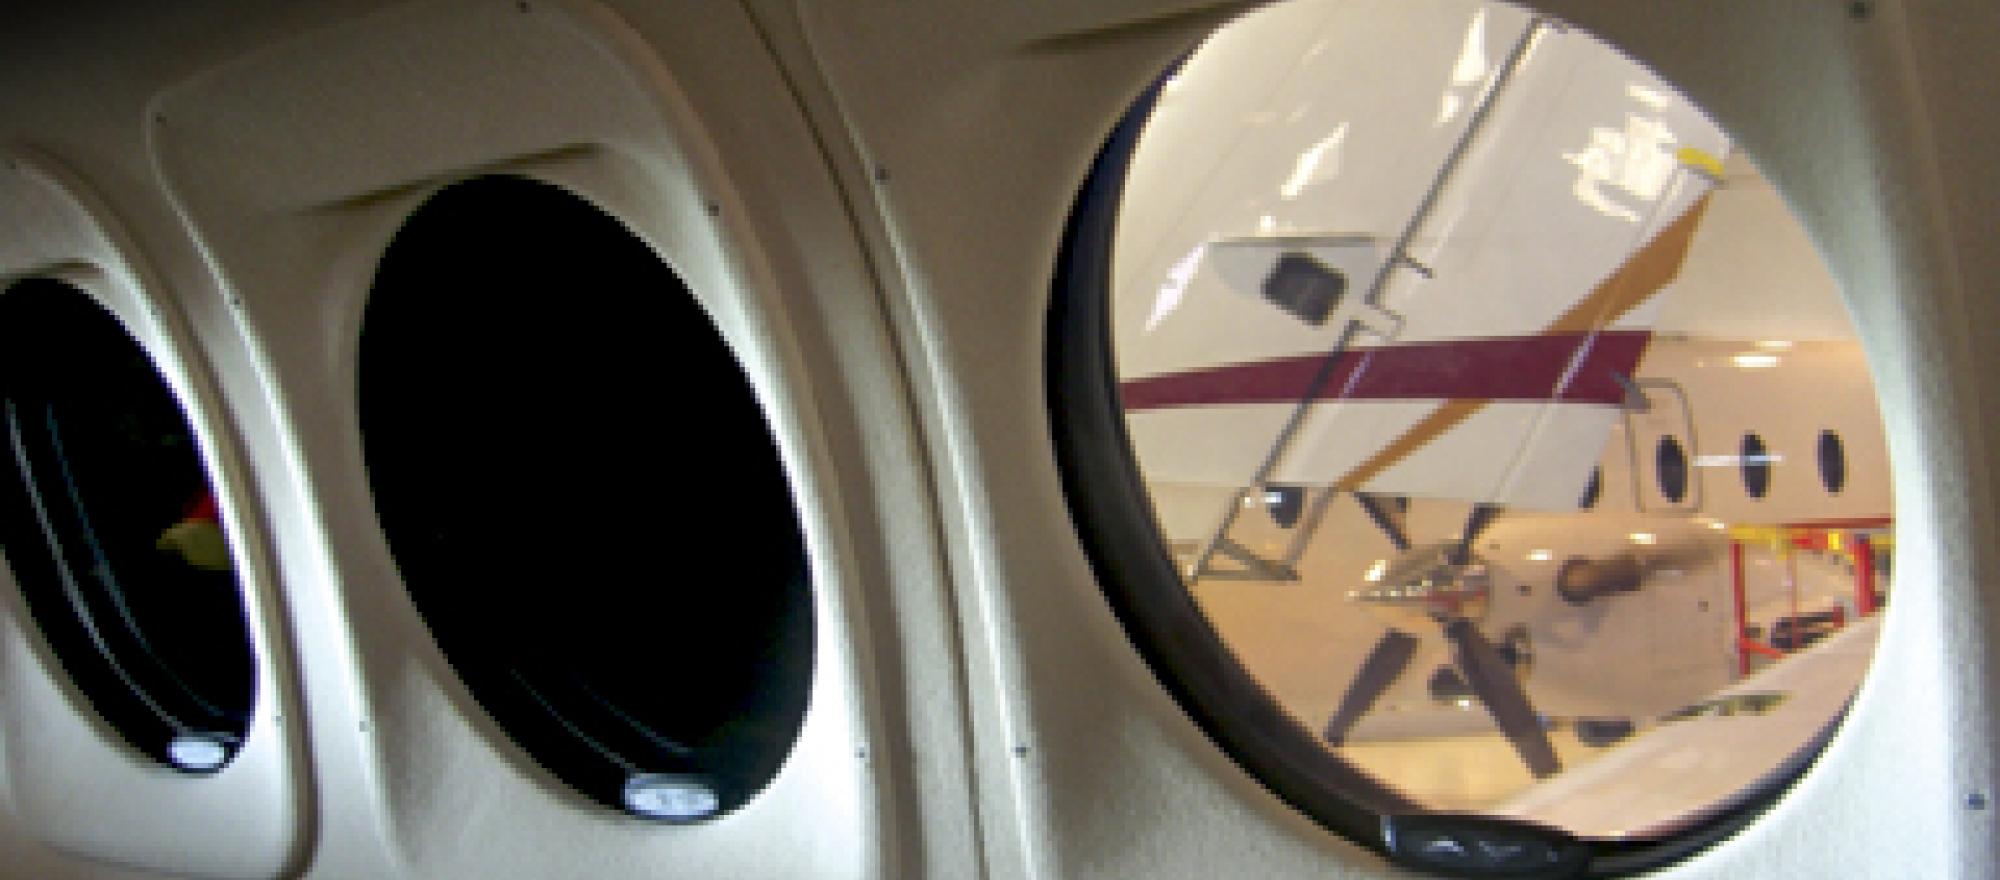 Hawker Beechcraft offers the SPD SmartGlass window as a retrofit for its King